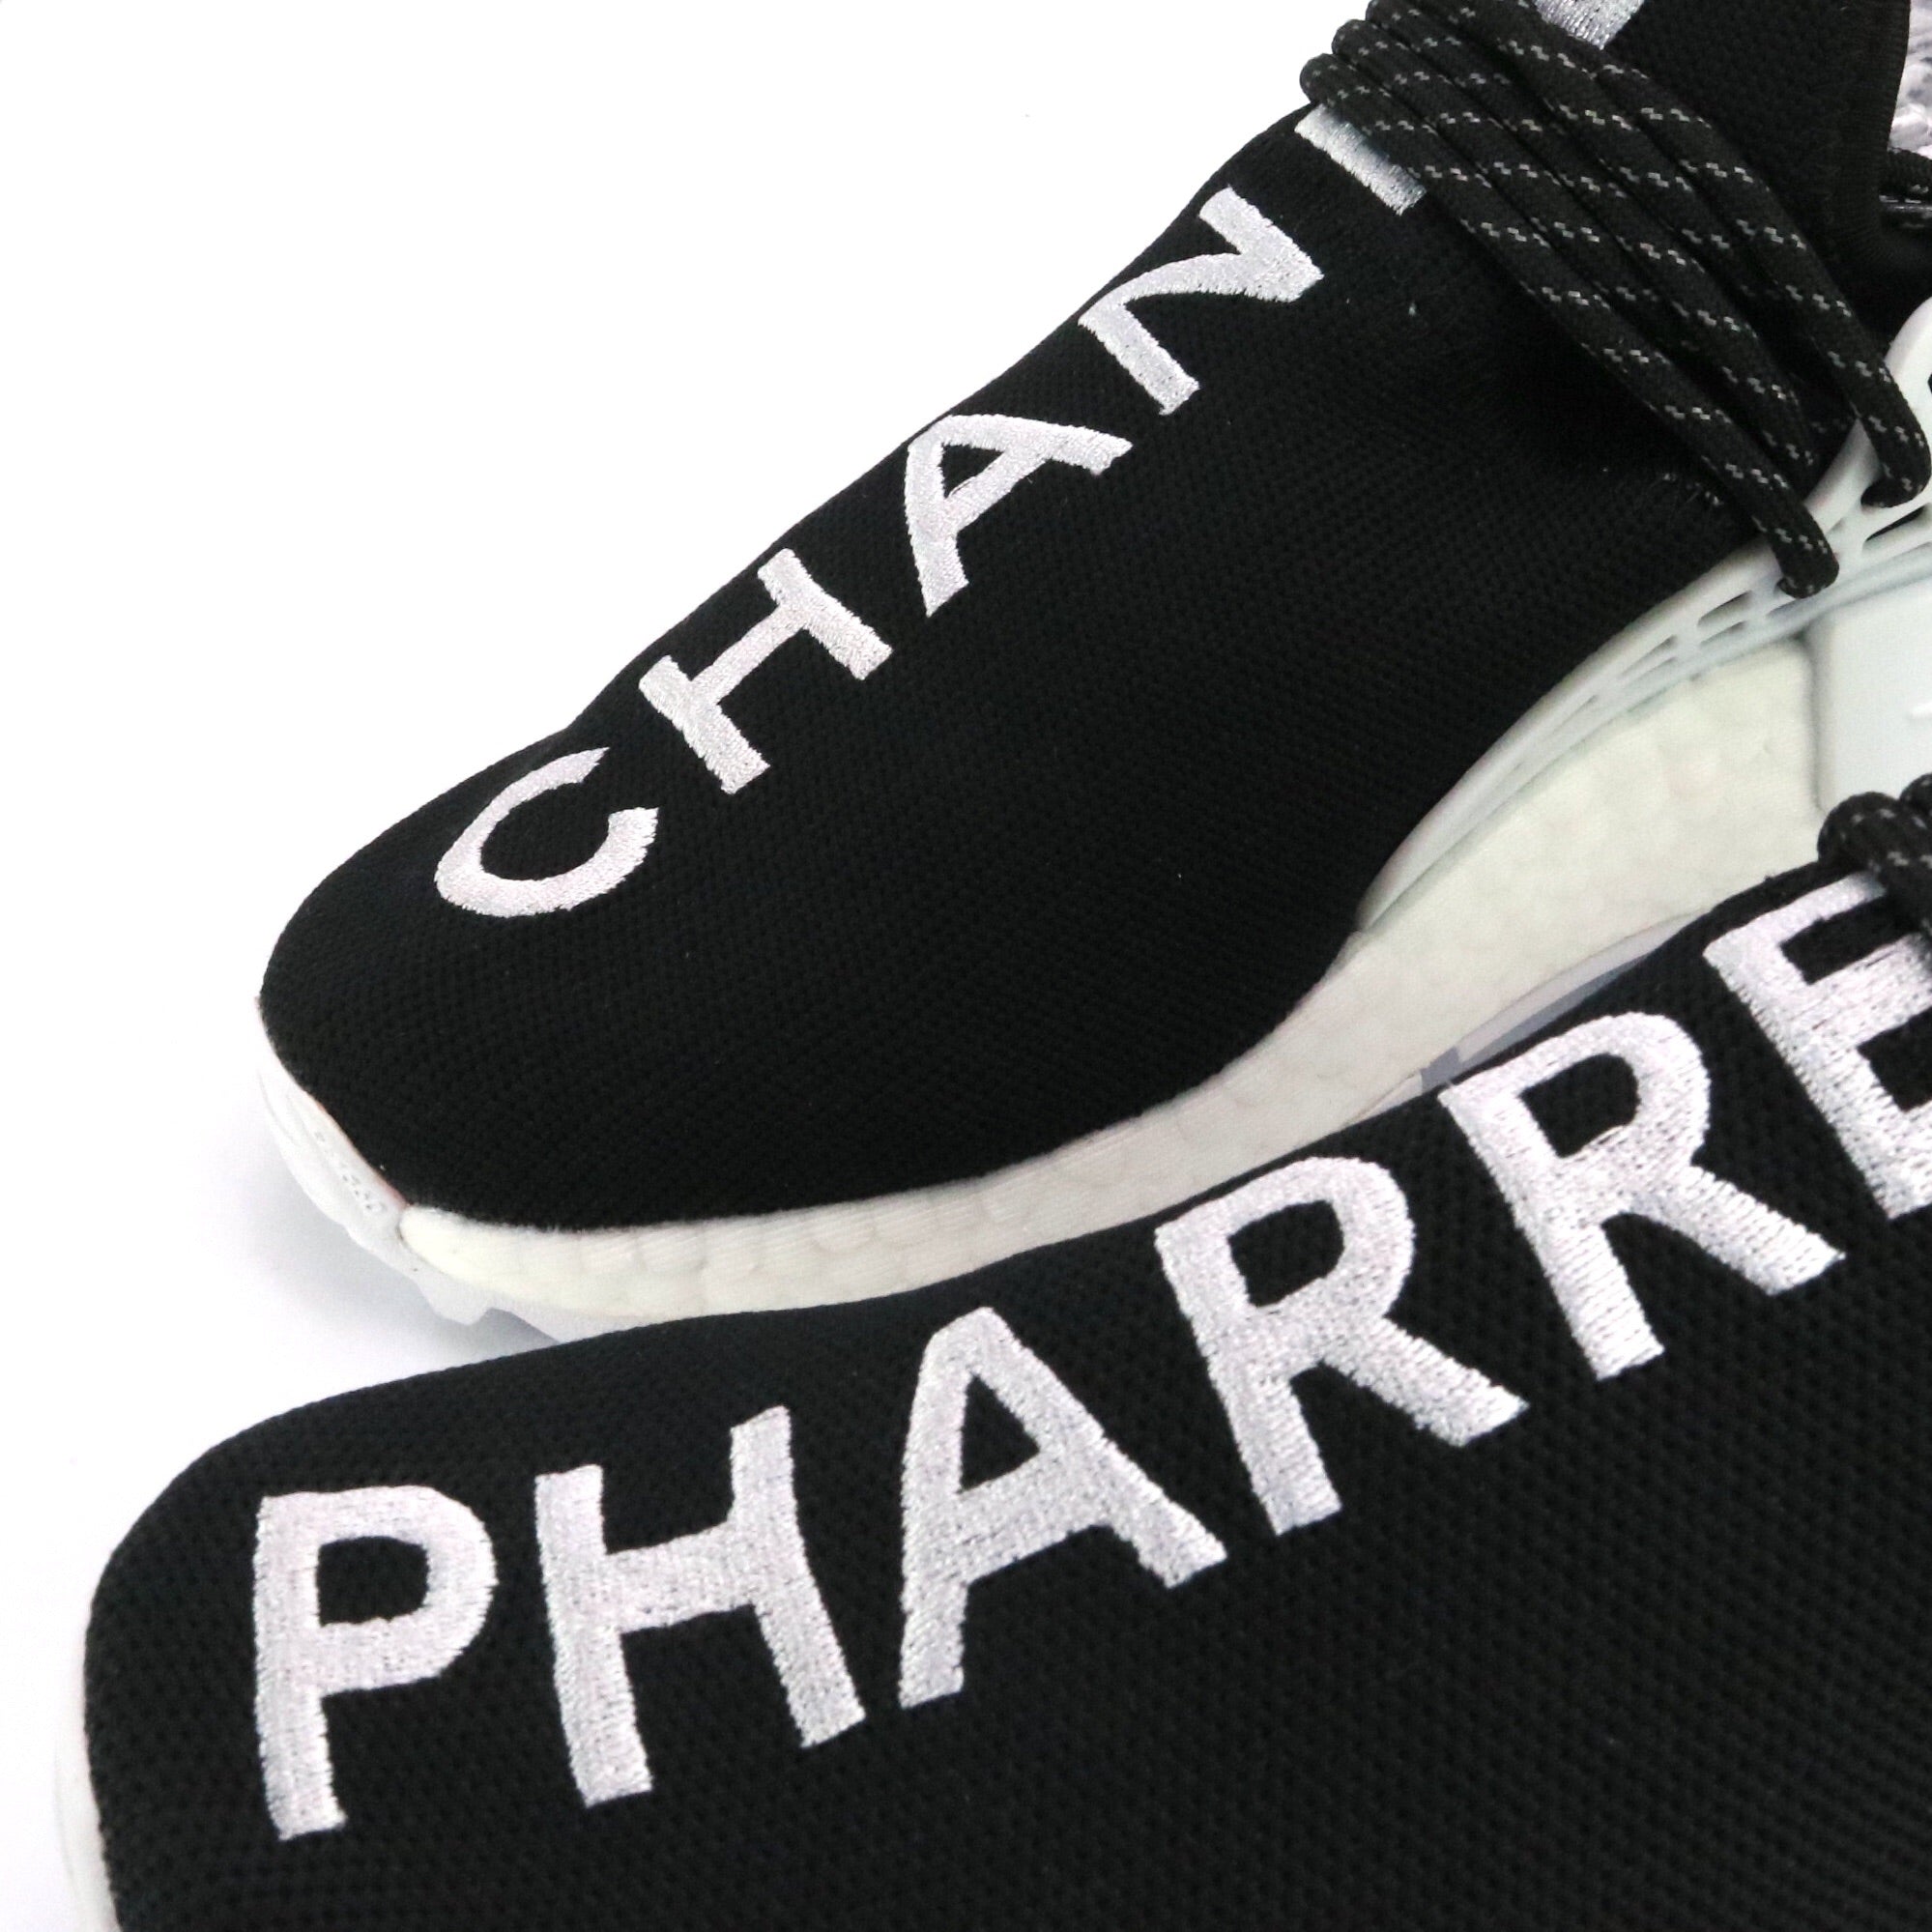 Adidas x Pharrell Williams CC Hu NMD Chanel Sneakers  Farfetch